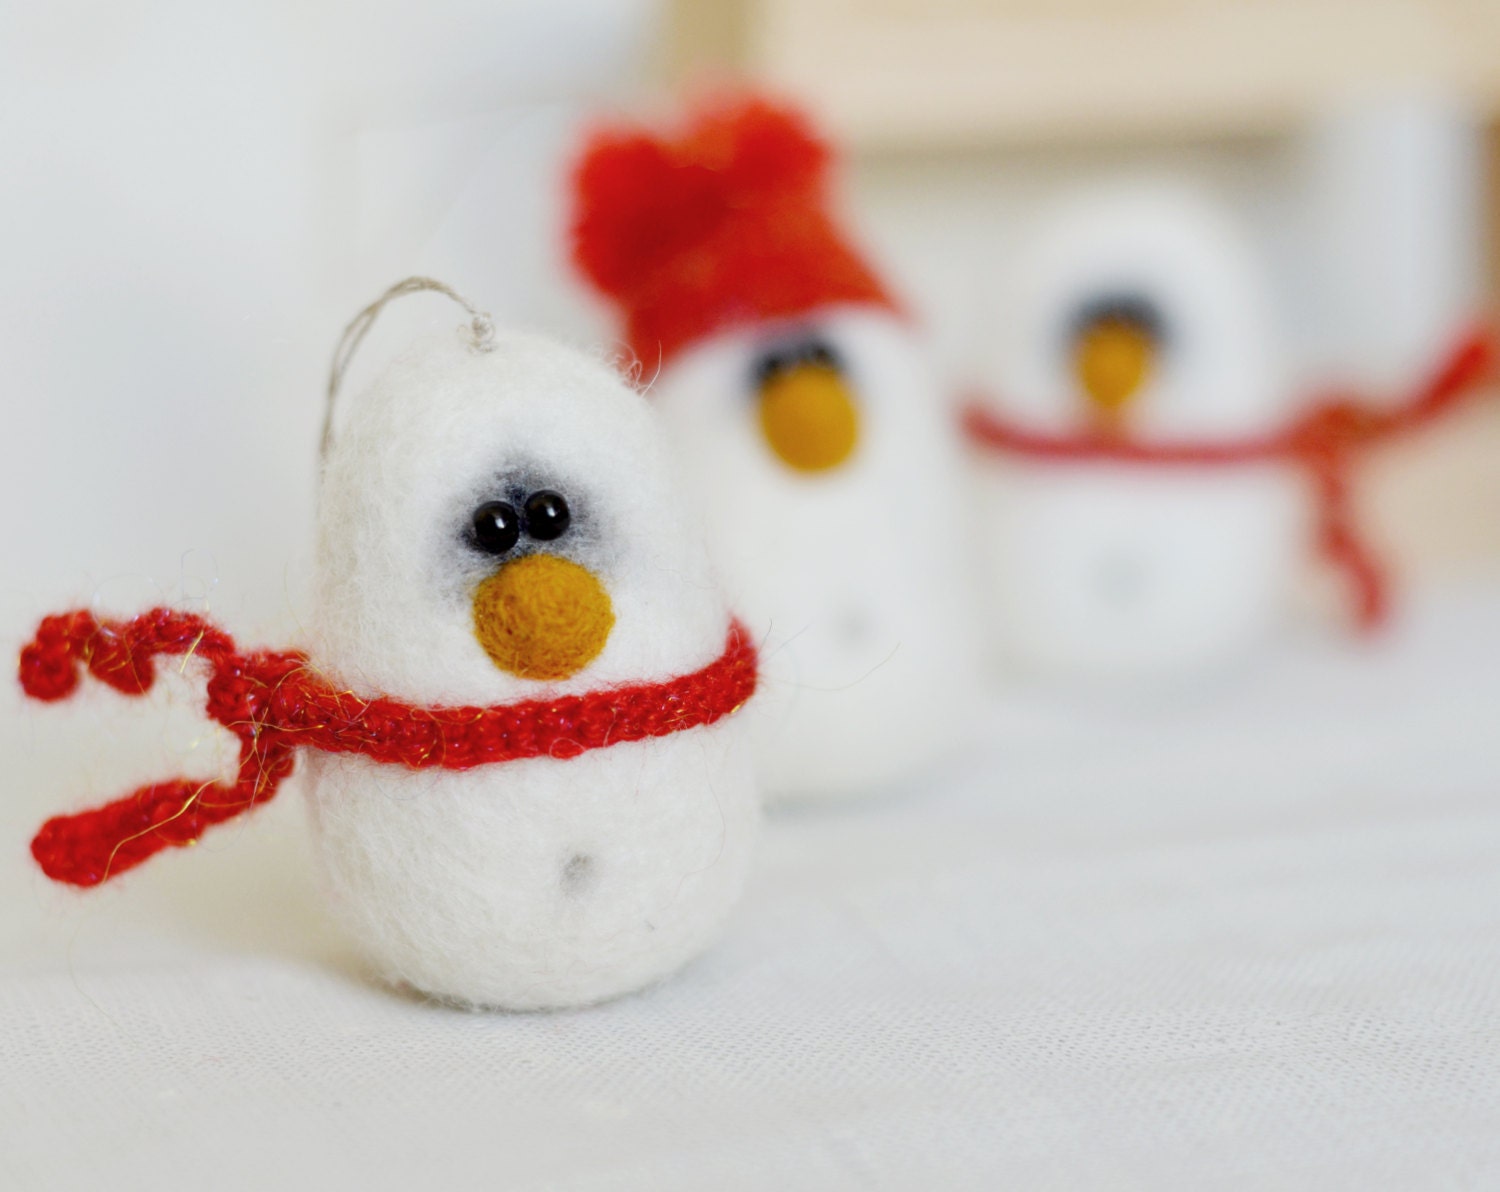 Christmas decorations - christmas ornaments - christmas decor - Handmade toys - Needle felting - Felt toys - Christmas gift - Gifts for her